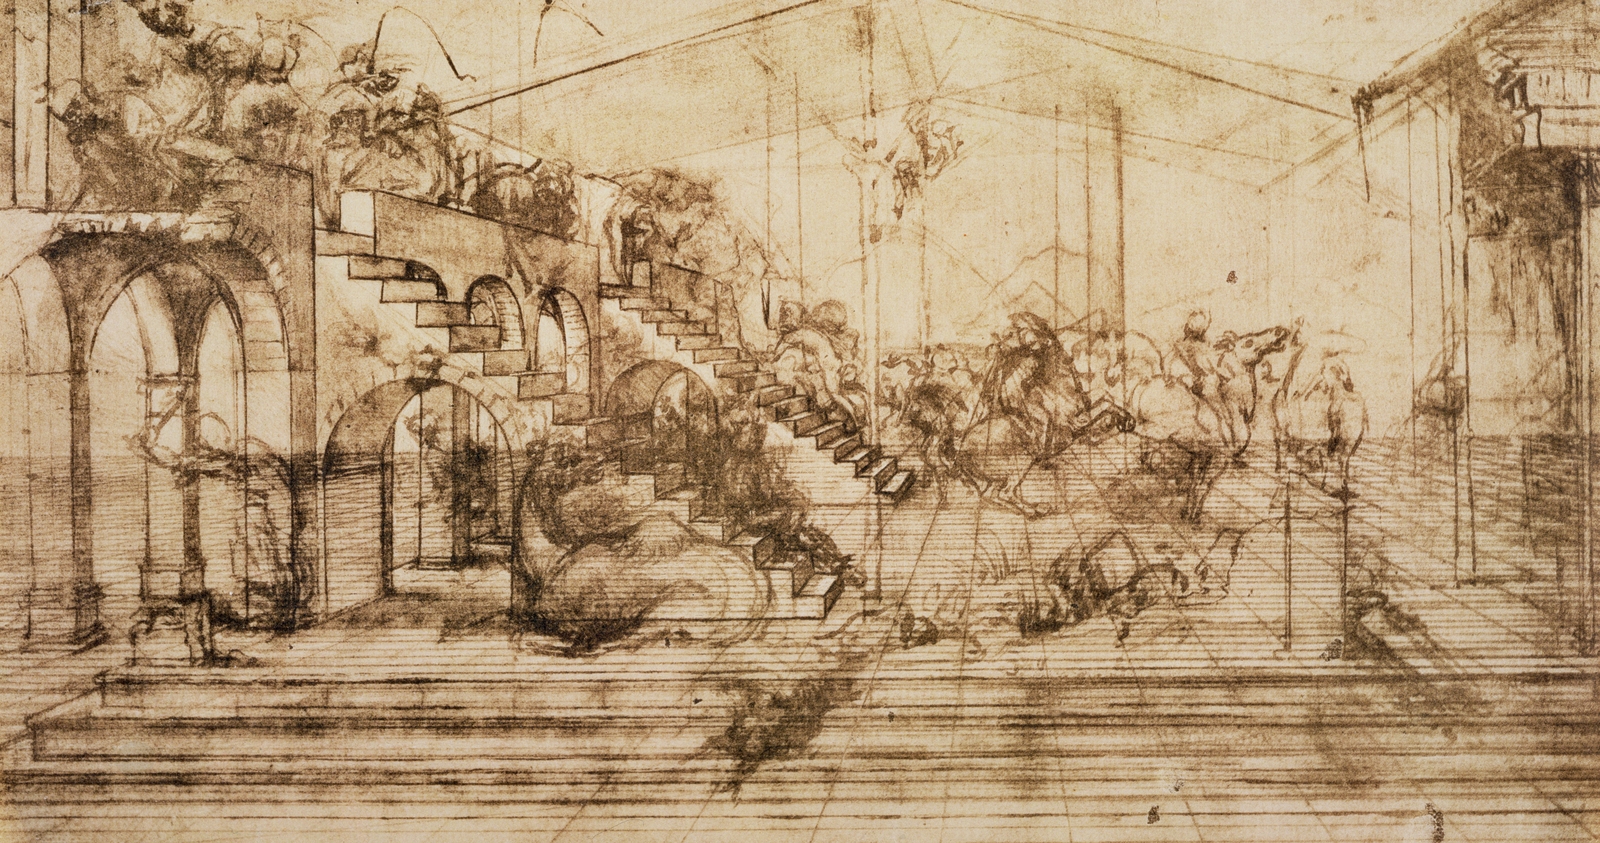 Leonardo+da+Vinci-1452-1519 (852).jpg